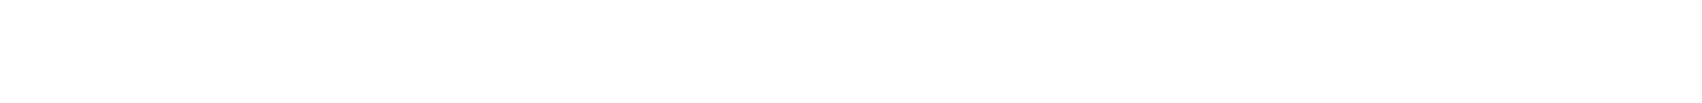 Royalty Pharma logo large for dark backgrounds (transparent PNG)